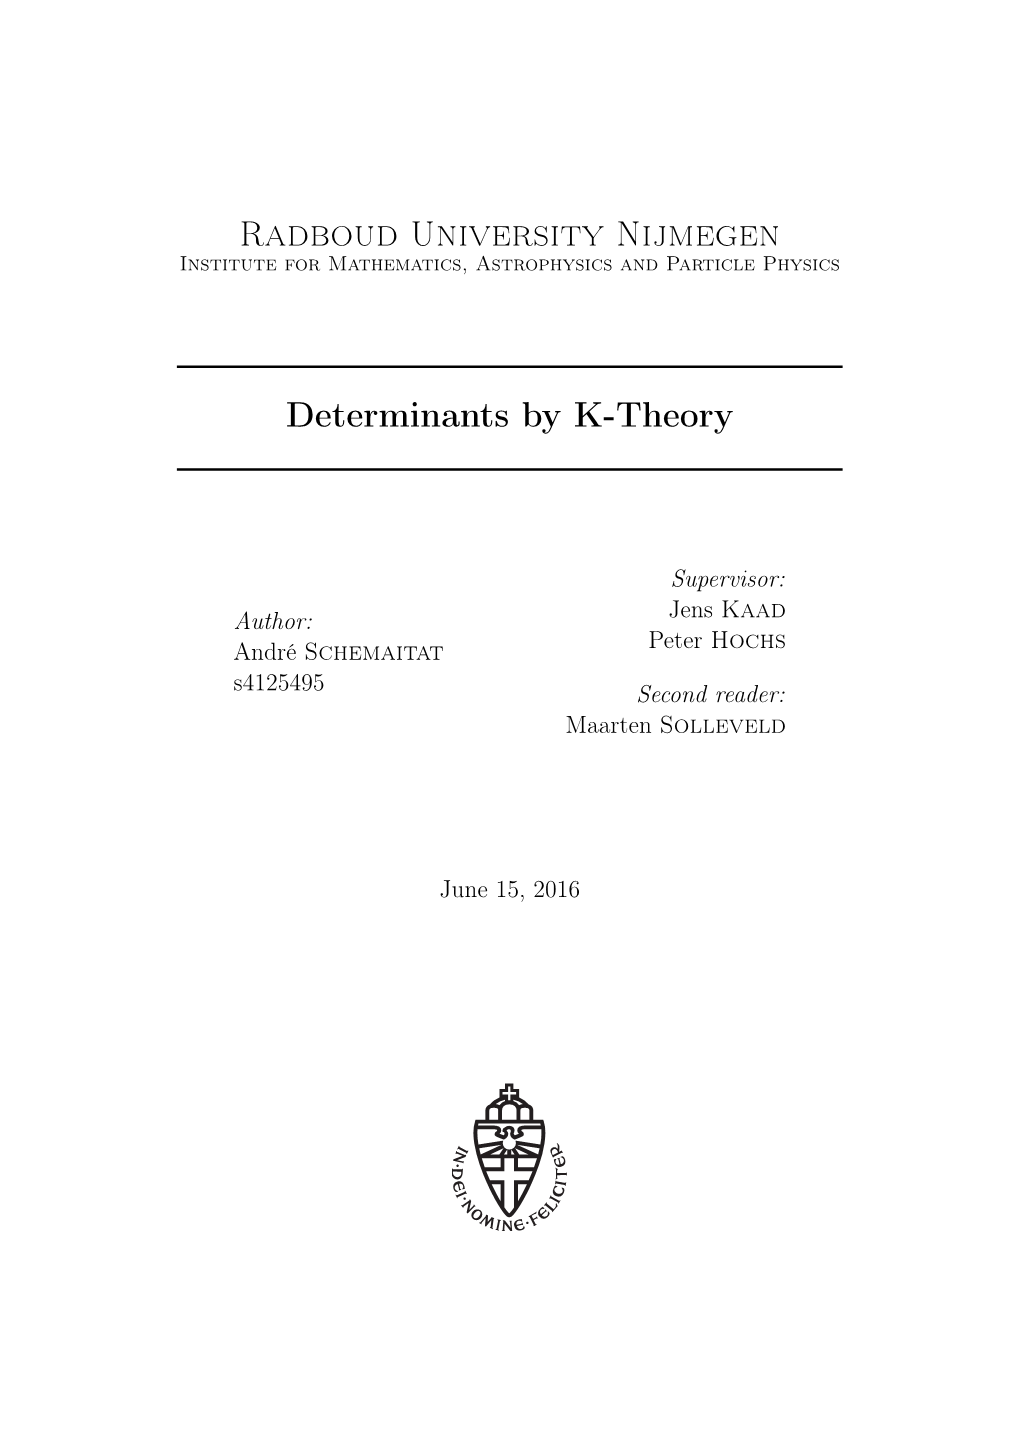 Radboud University Nijmegen Determinants by K-Theory